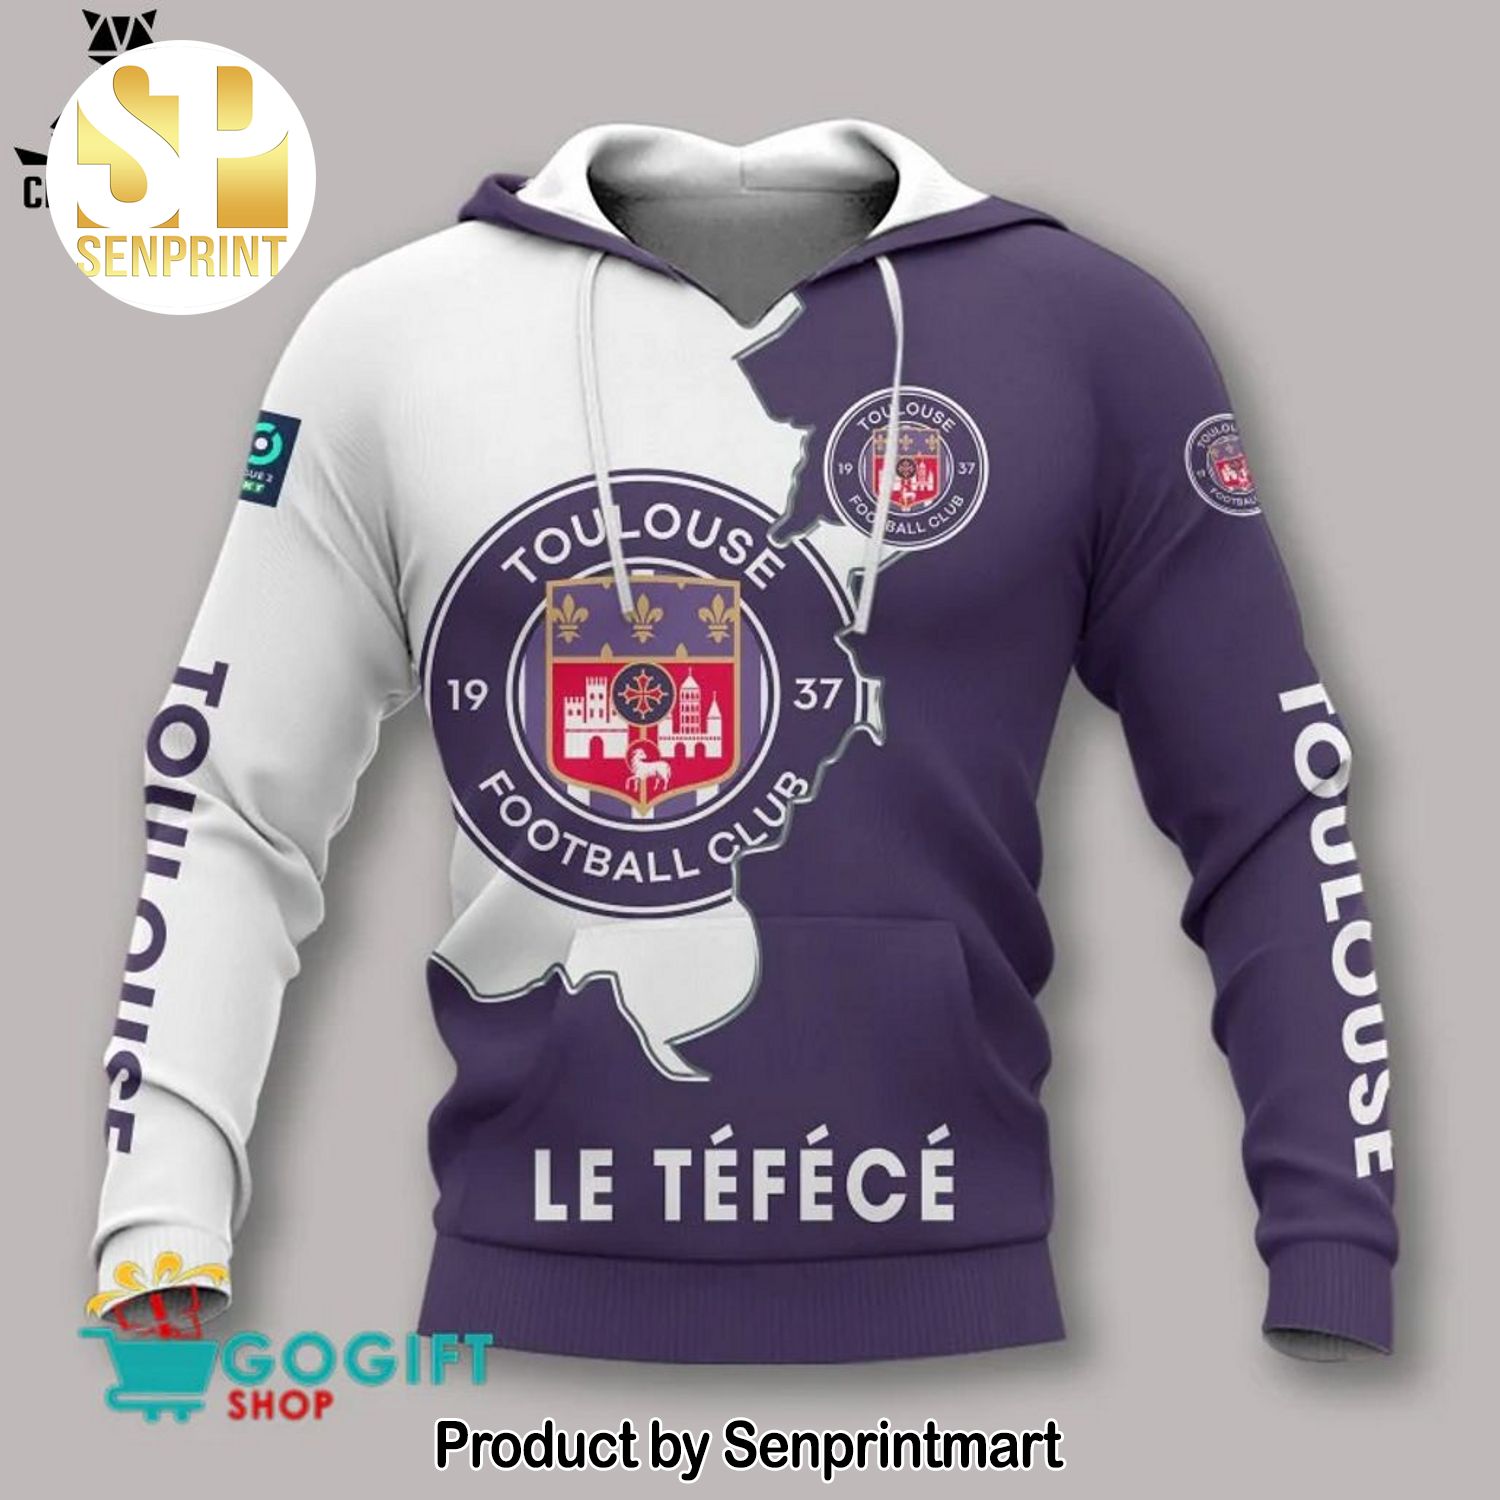 Toulouse Football Club Logo Design On Sleeve Purple White Full Print Shirt